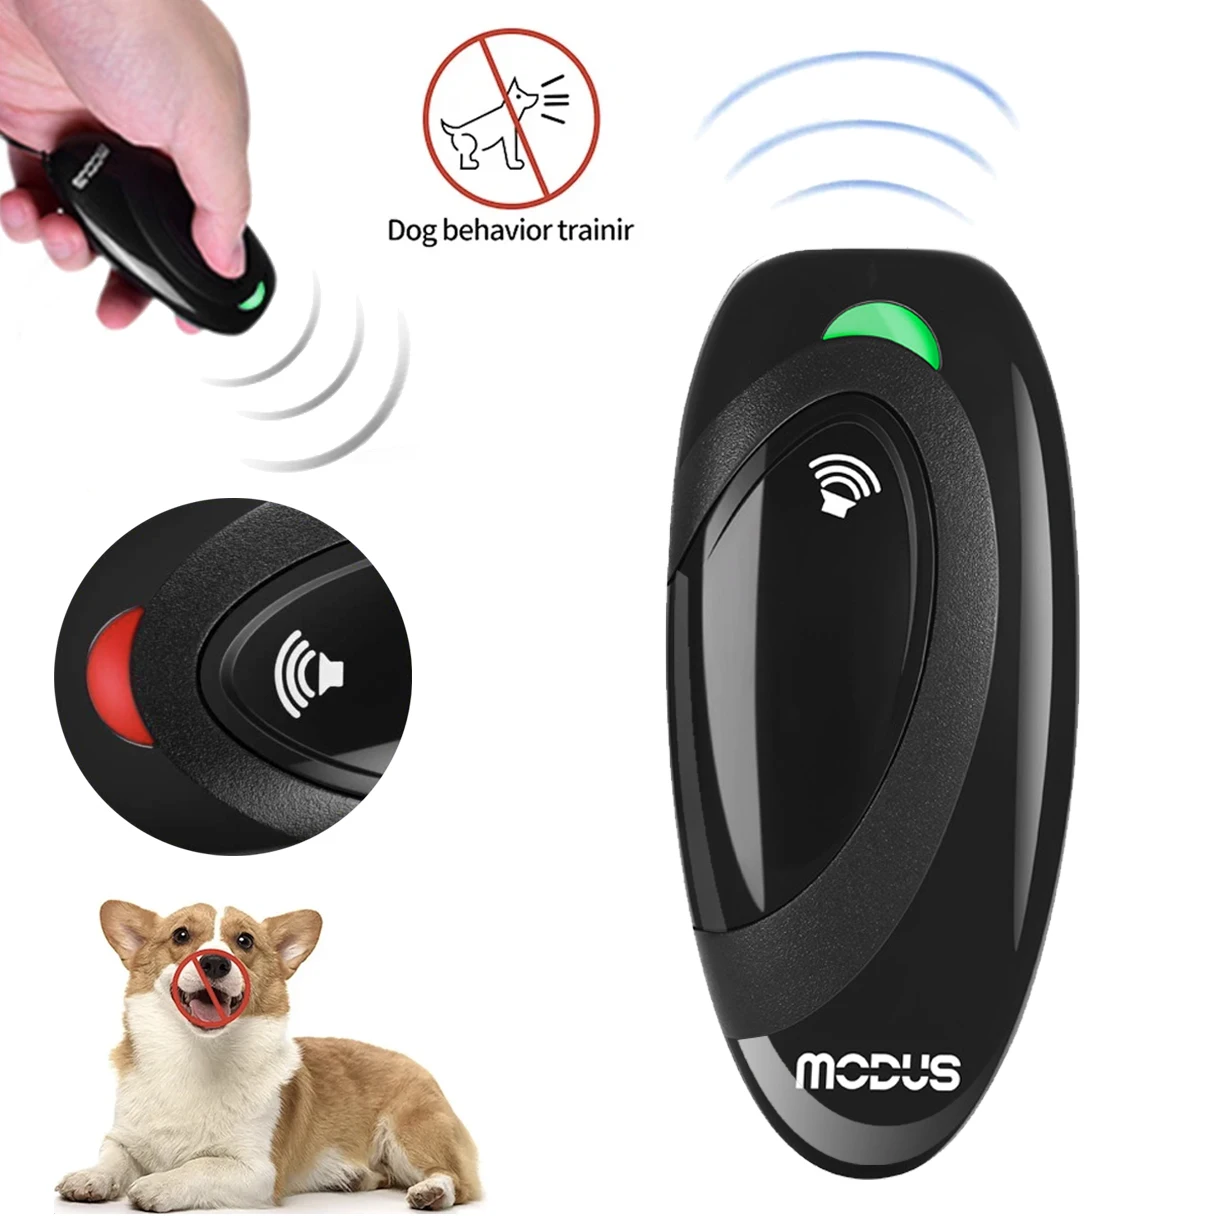 

Mini Ultrasonic Dog Repeller Pet Anti Bark Device Dog Toys Pet Portable Stop Barking Clicker Training Control Tool Dogs Supplies